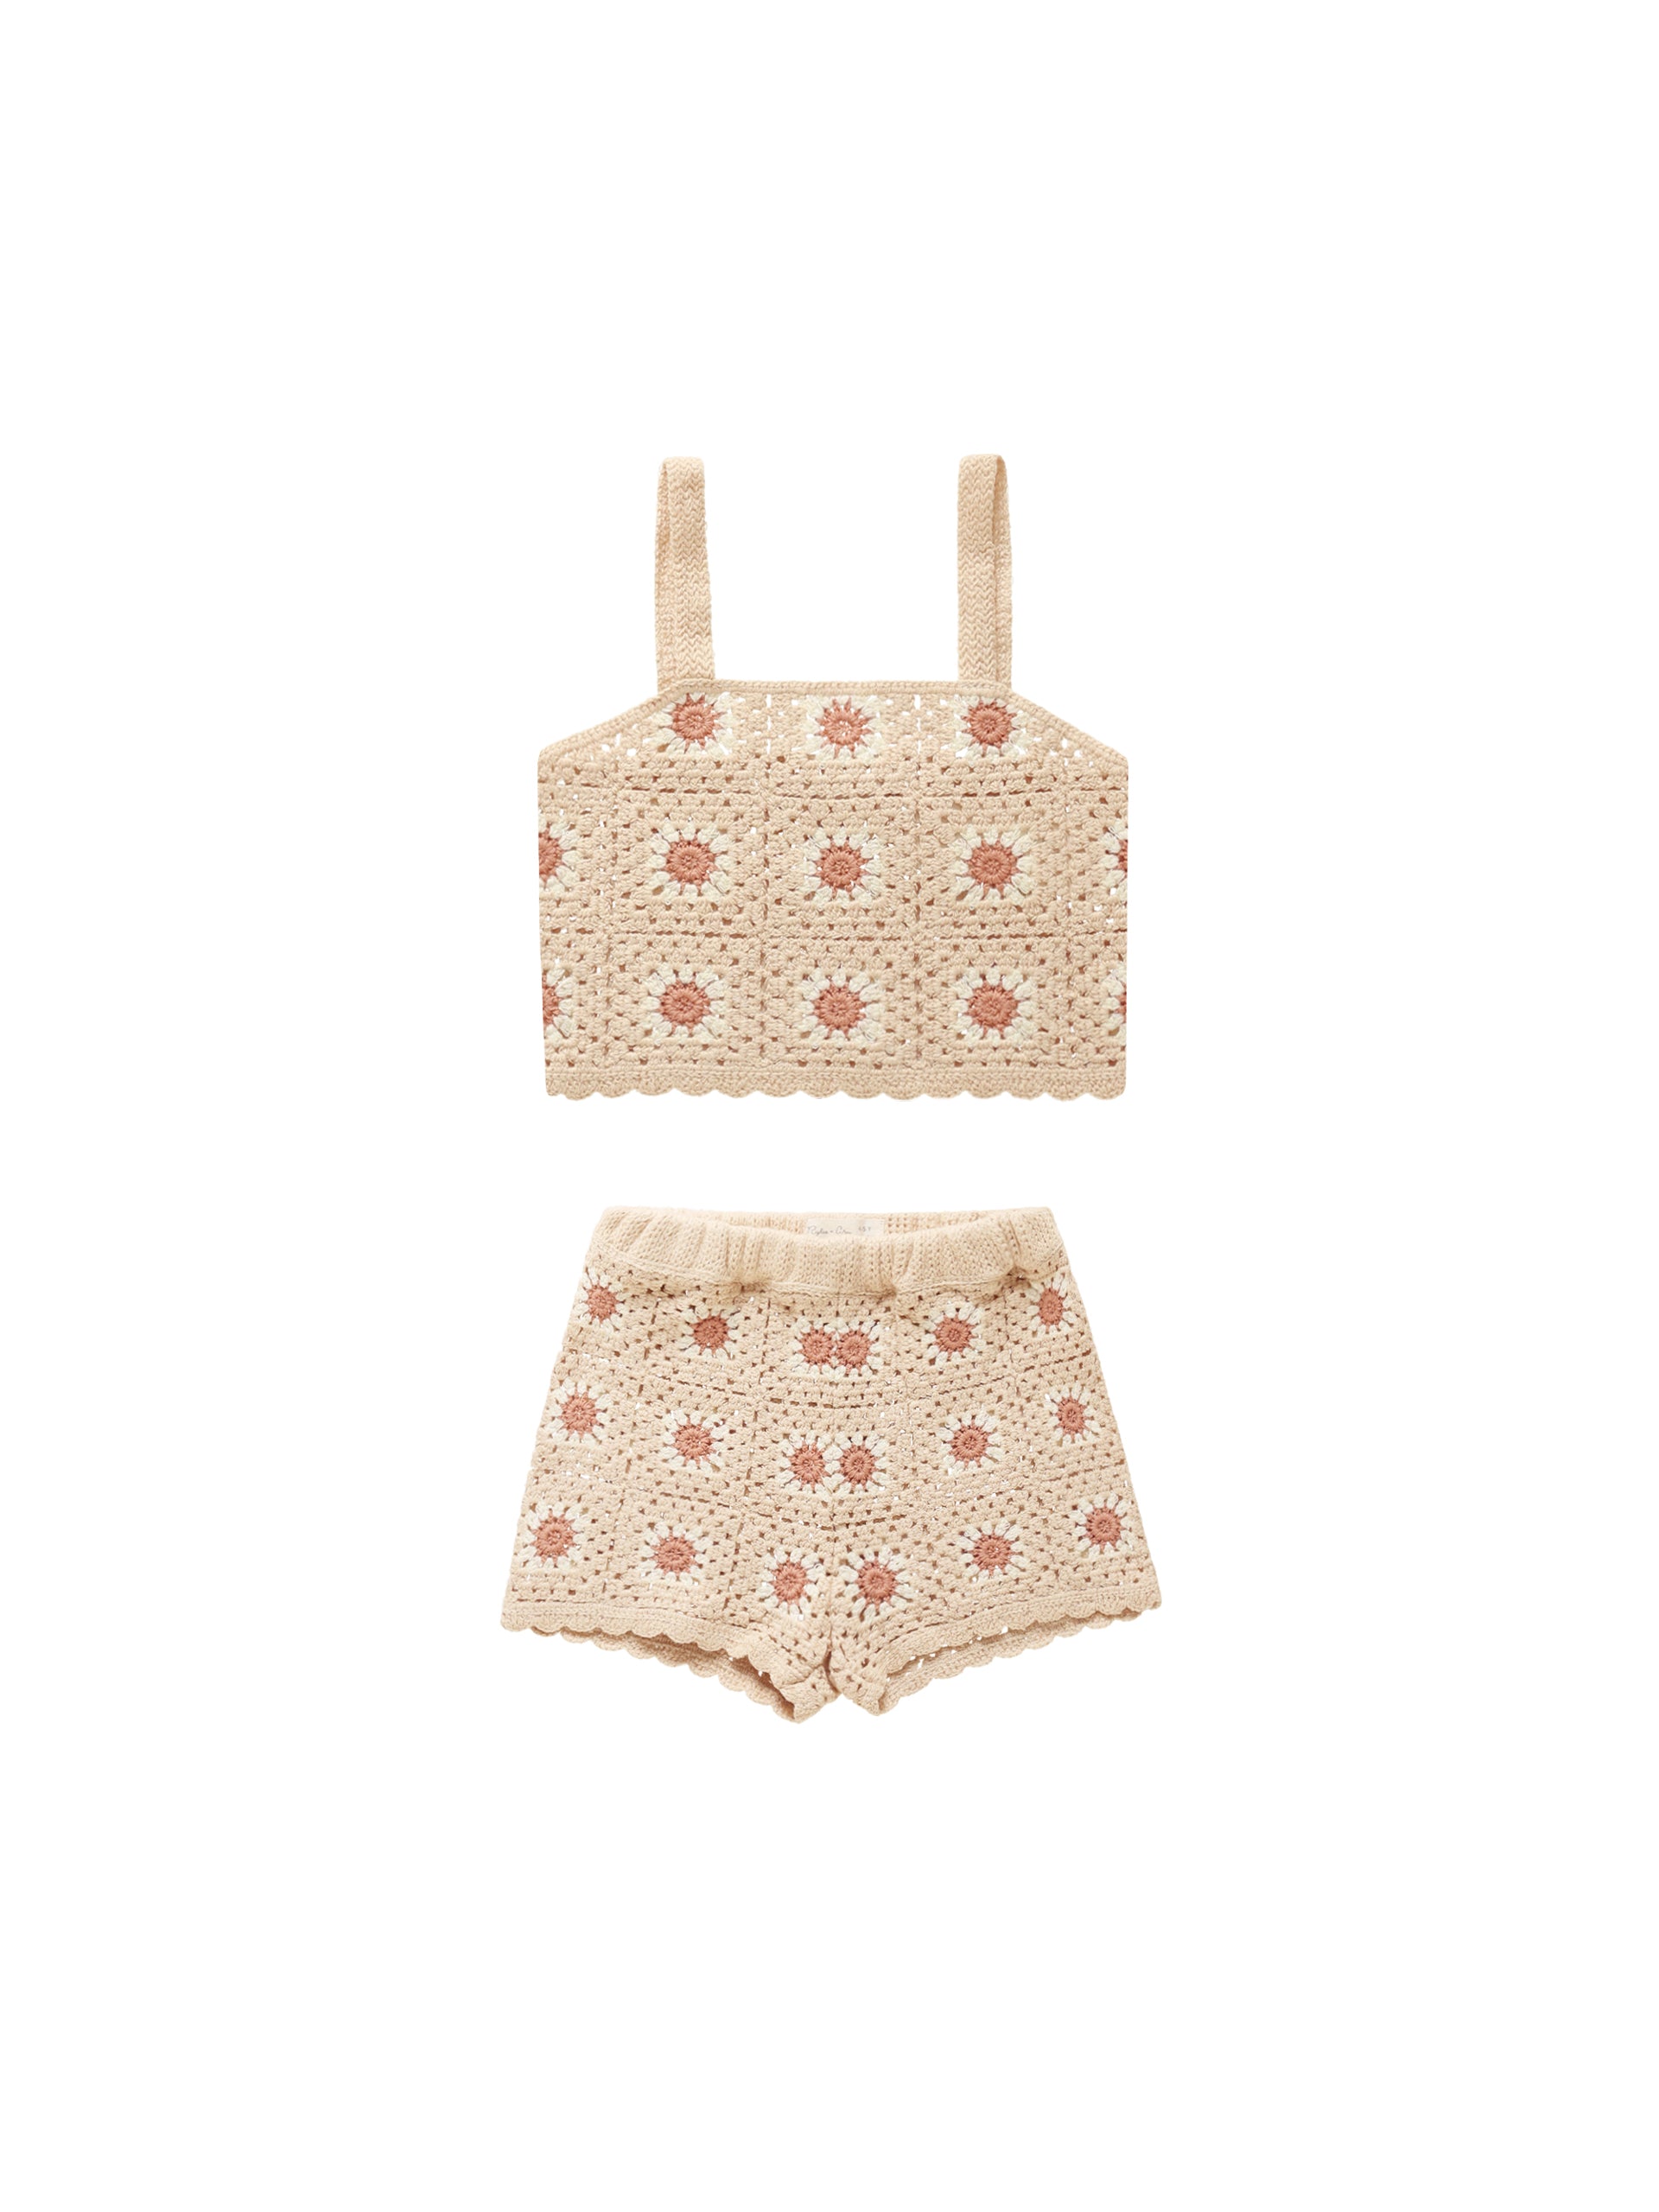 Rylee + Cru Crochet Summer Set - Floral